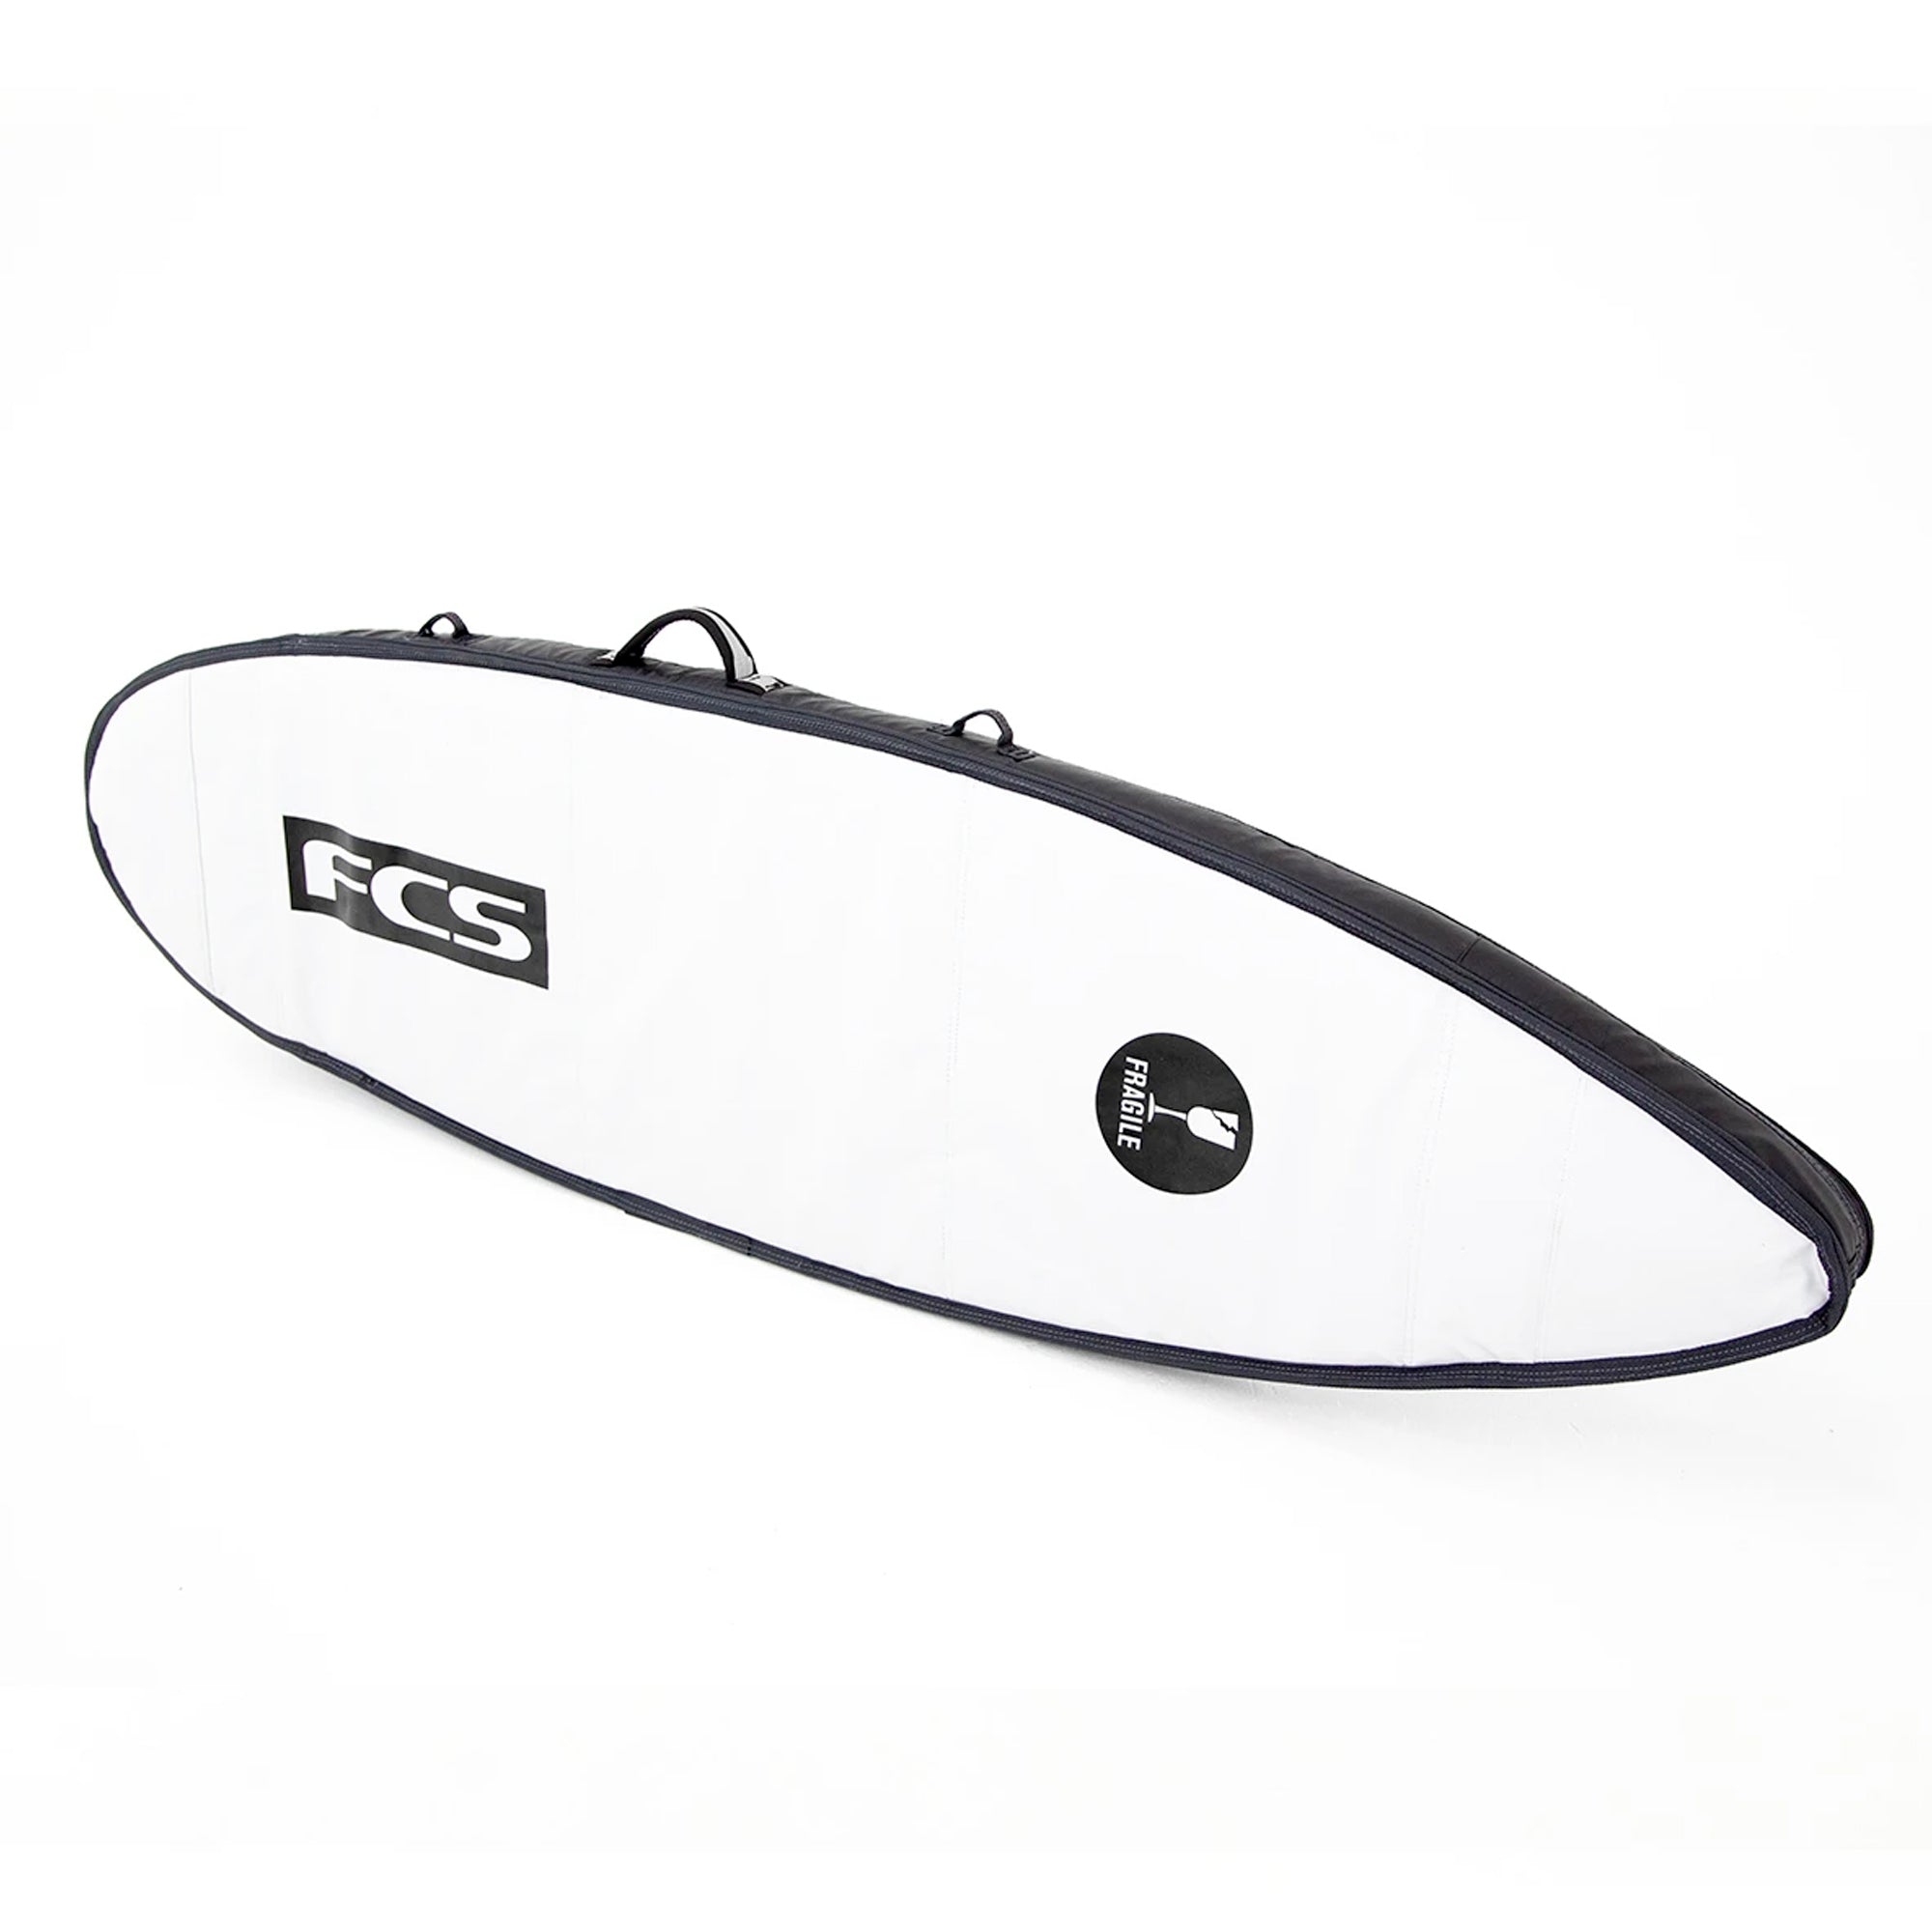 FCS Travel 4 All Purpose Surfboard Bag